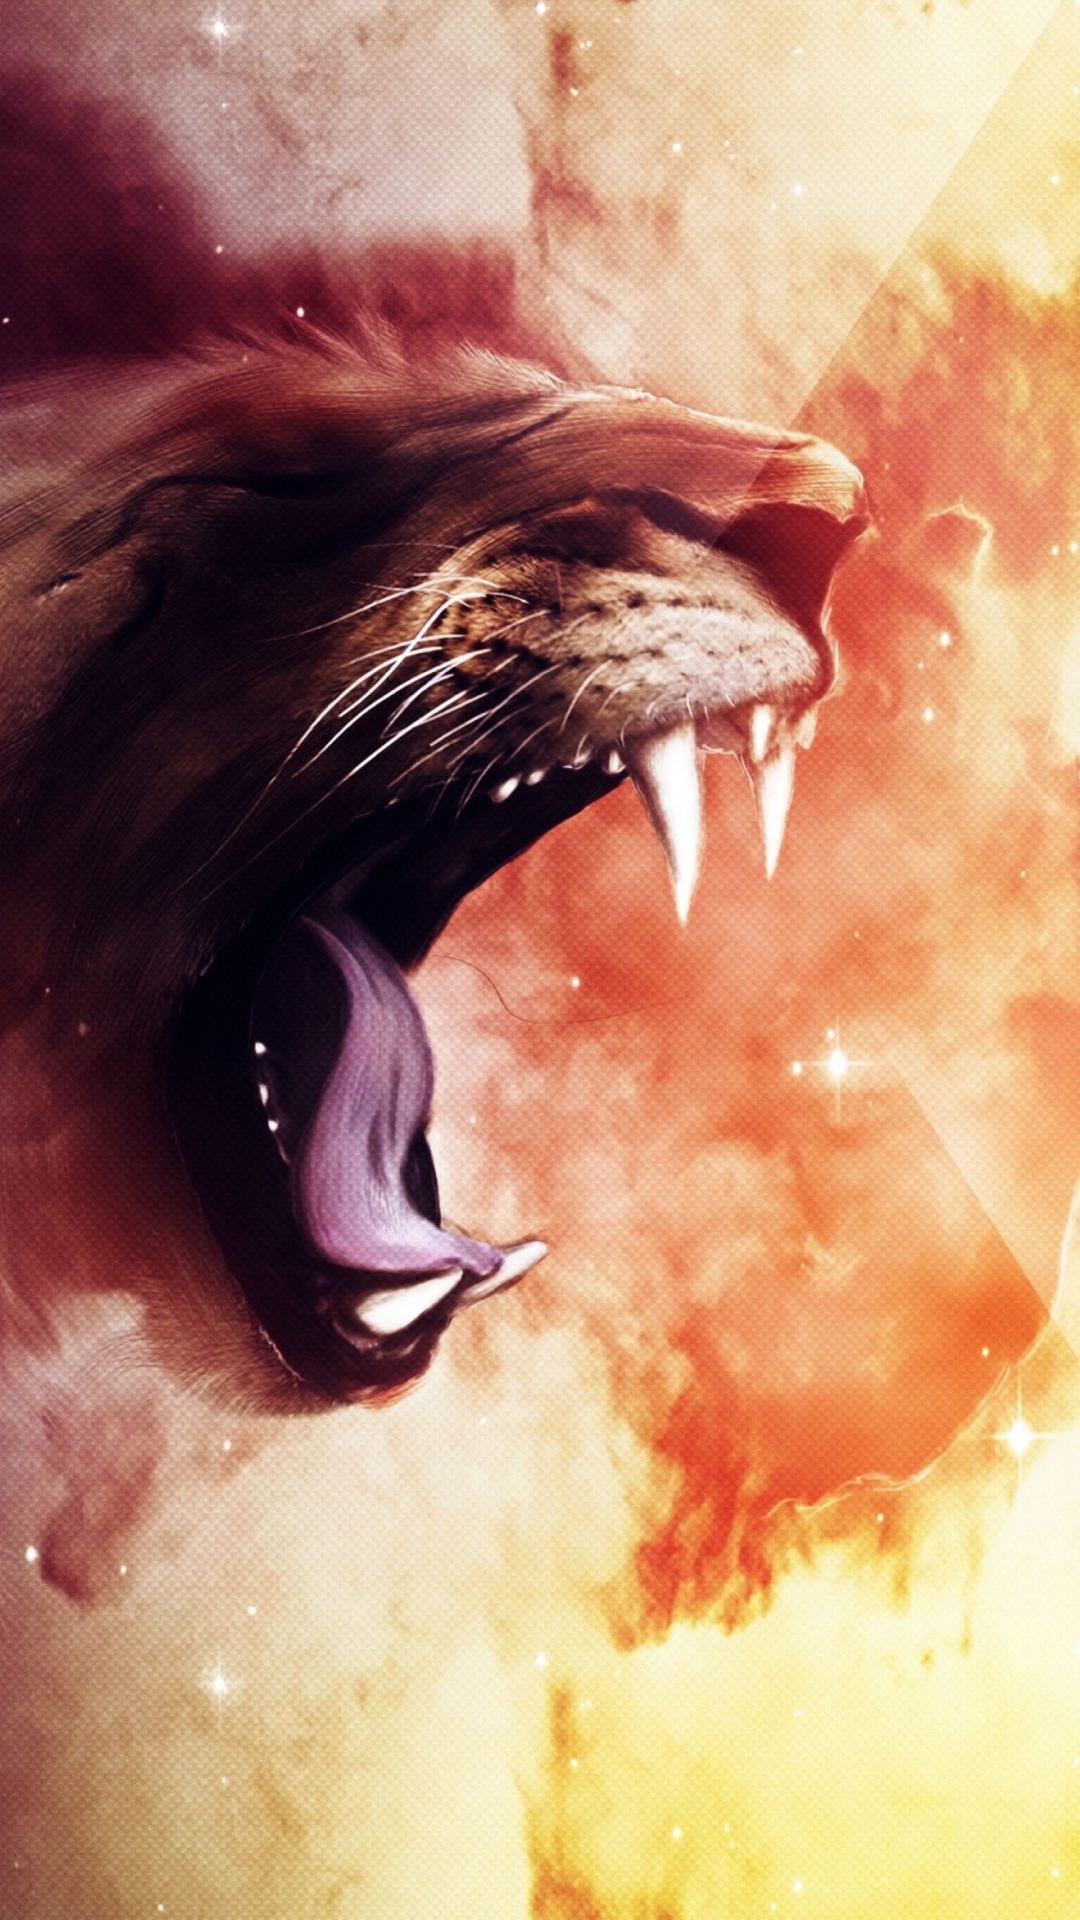 Roaring Lion wallpaper 1080x1920